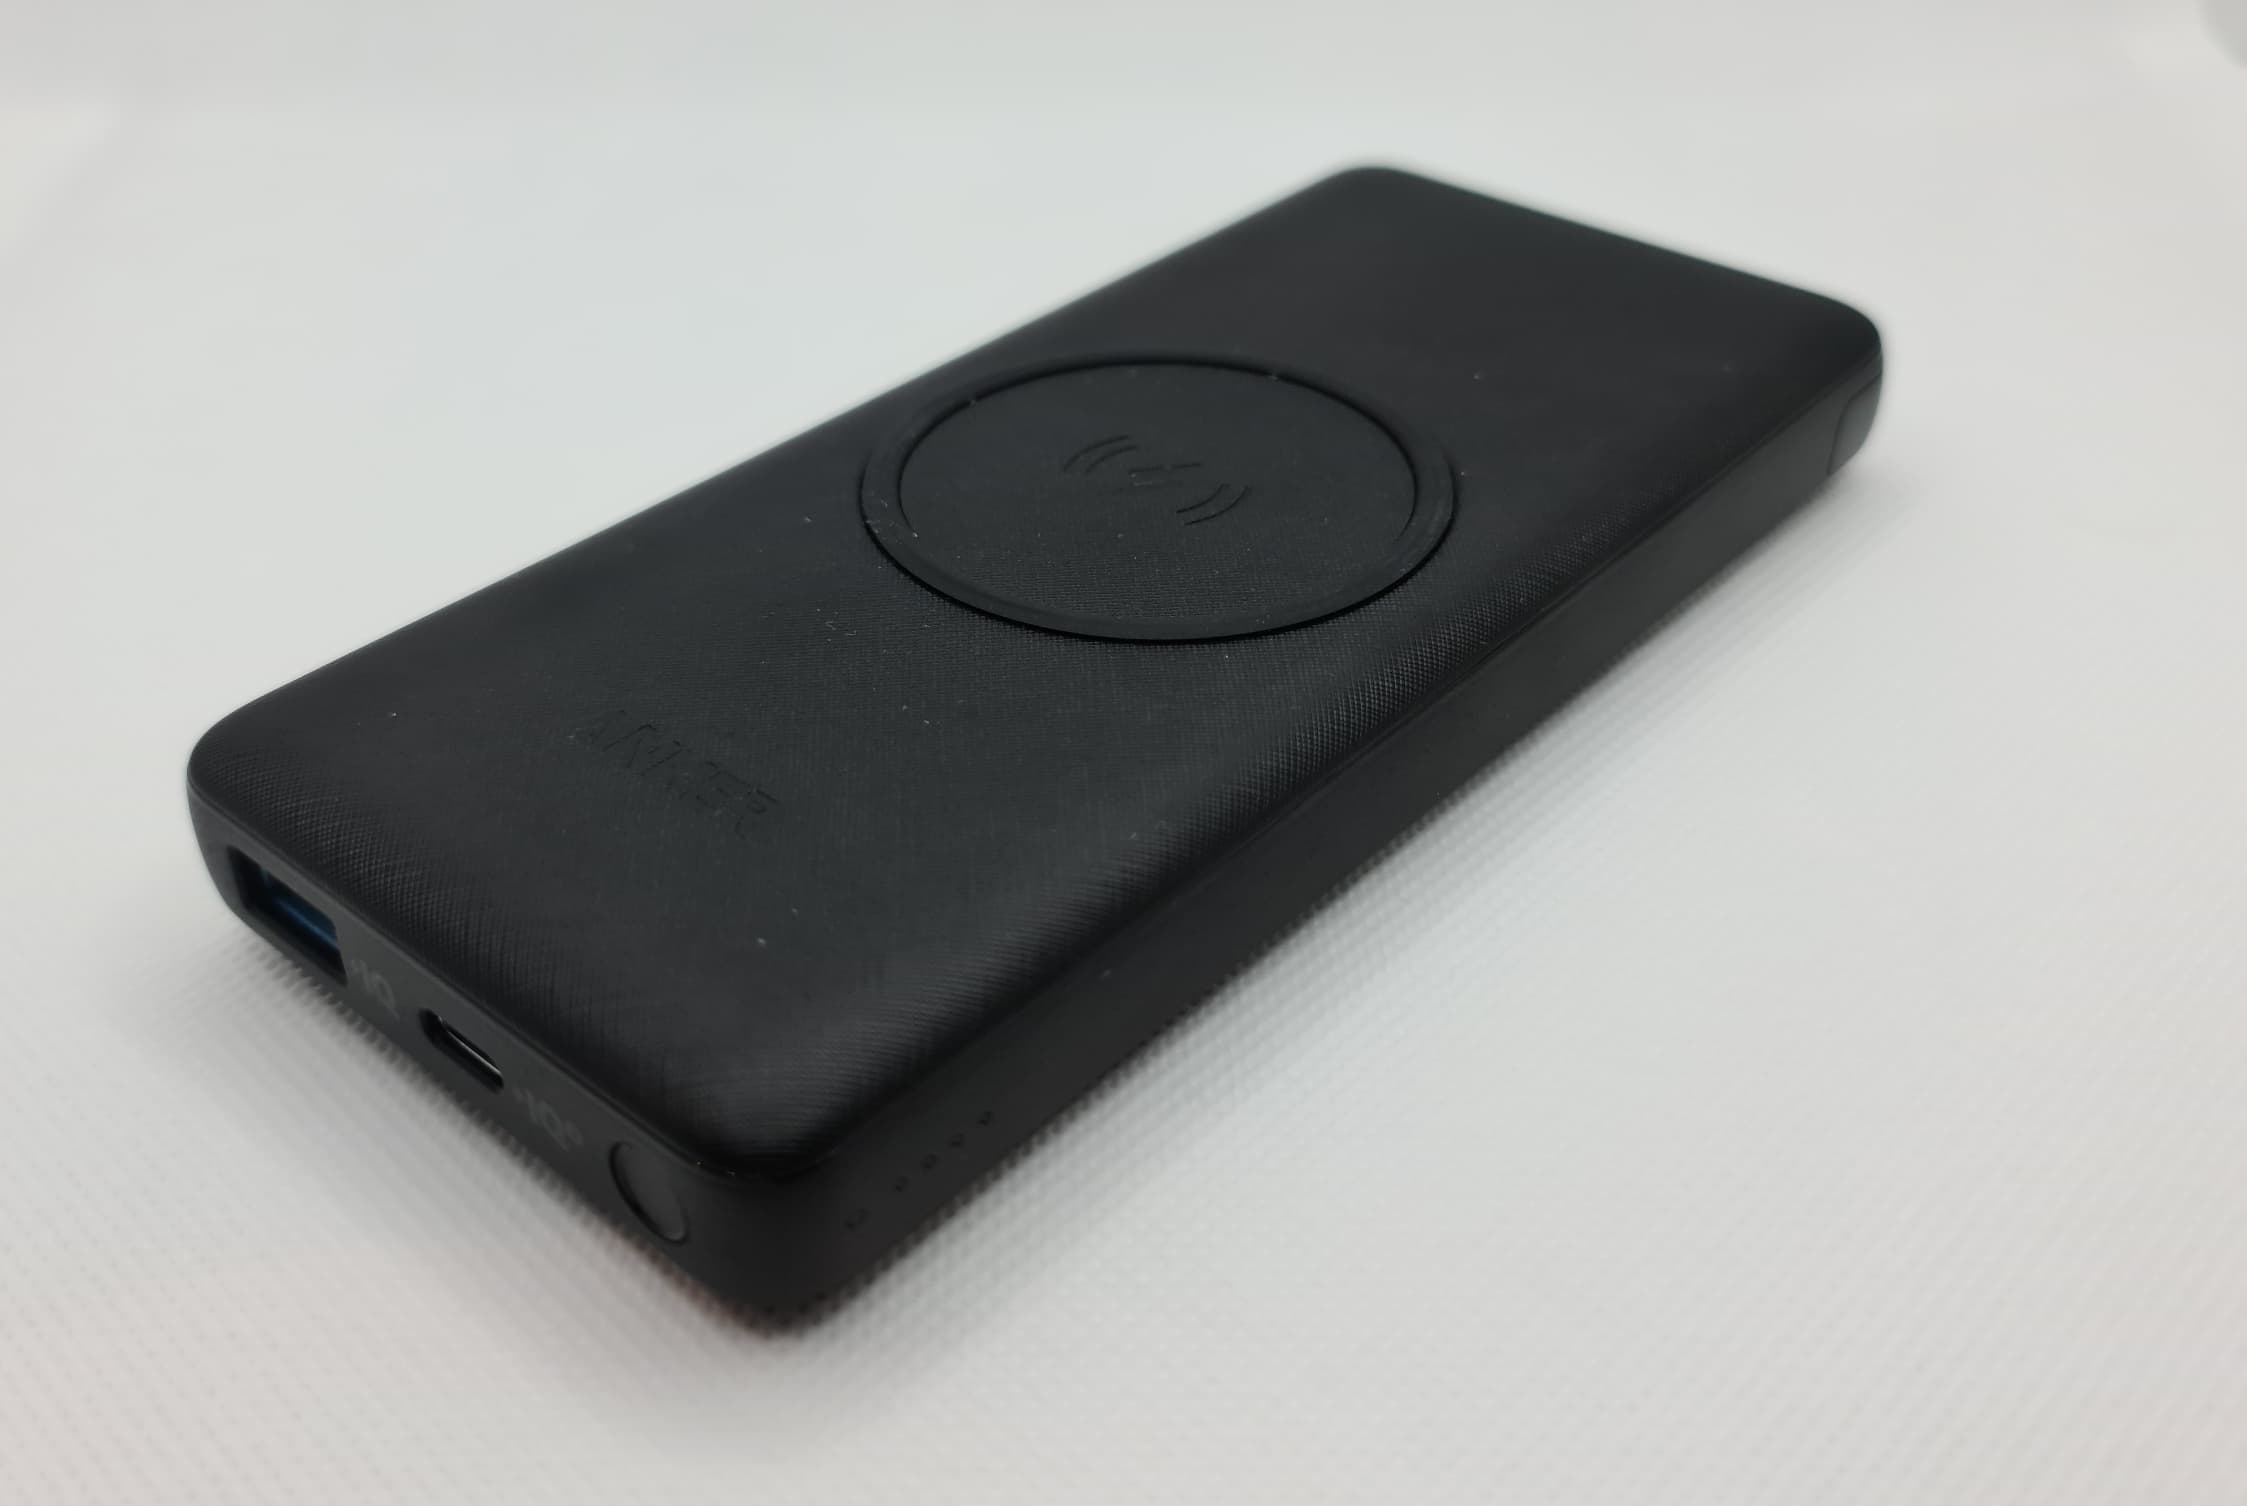 Anker PowerCore III 10K mAh USB-C Portable Battery Charger Black